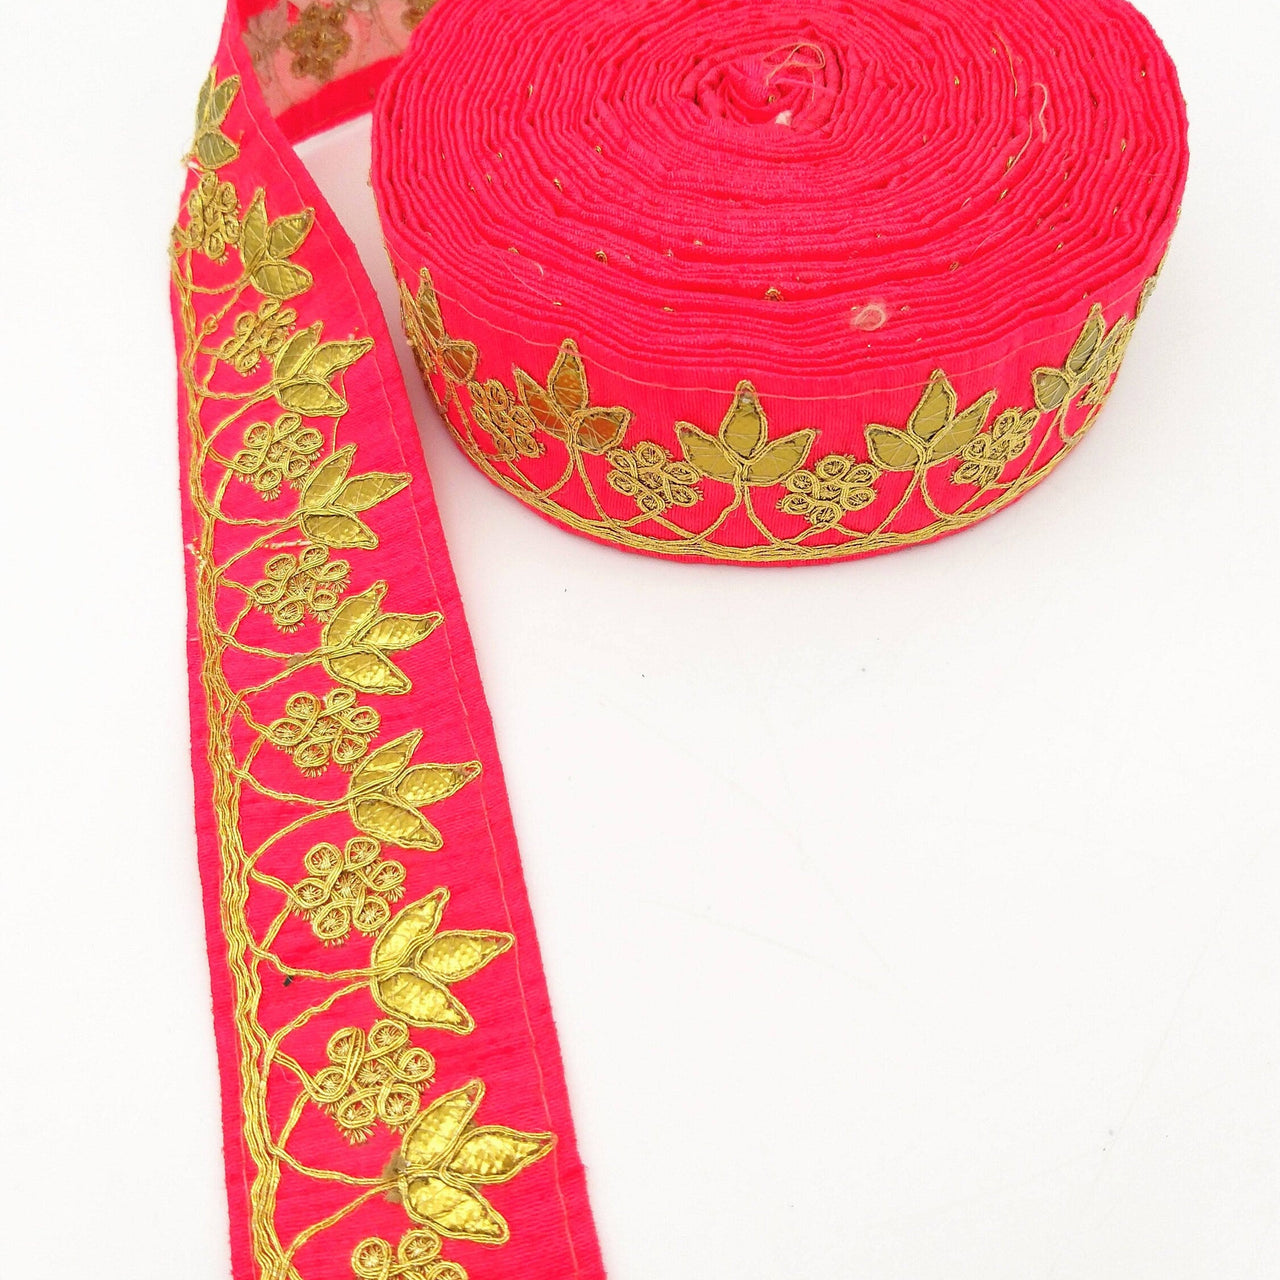 Radical Red Art Silk Fabric Trim, Gold Floral Embroidery Gota Patti Indian Sari Border Trim By Yard Decorative Trim Craft Lace